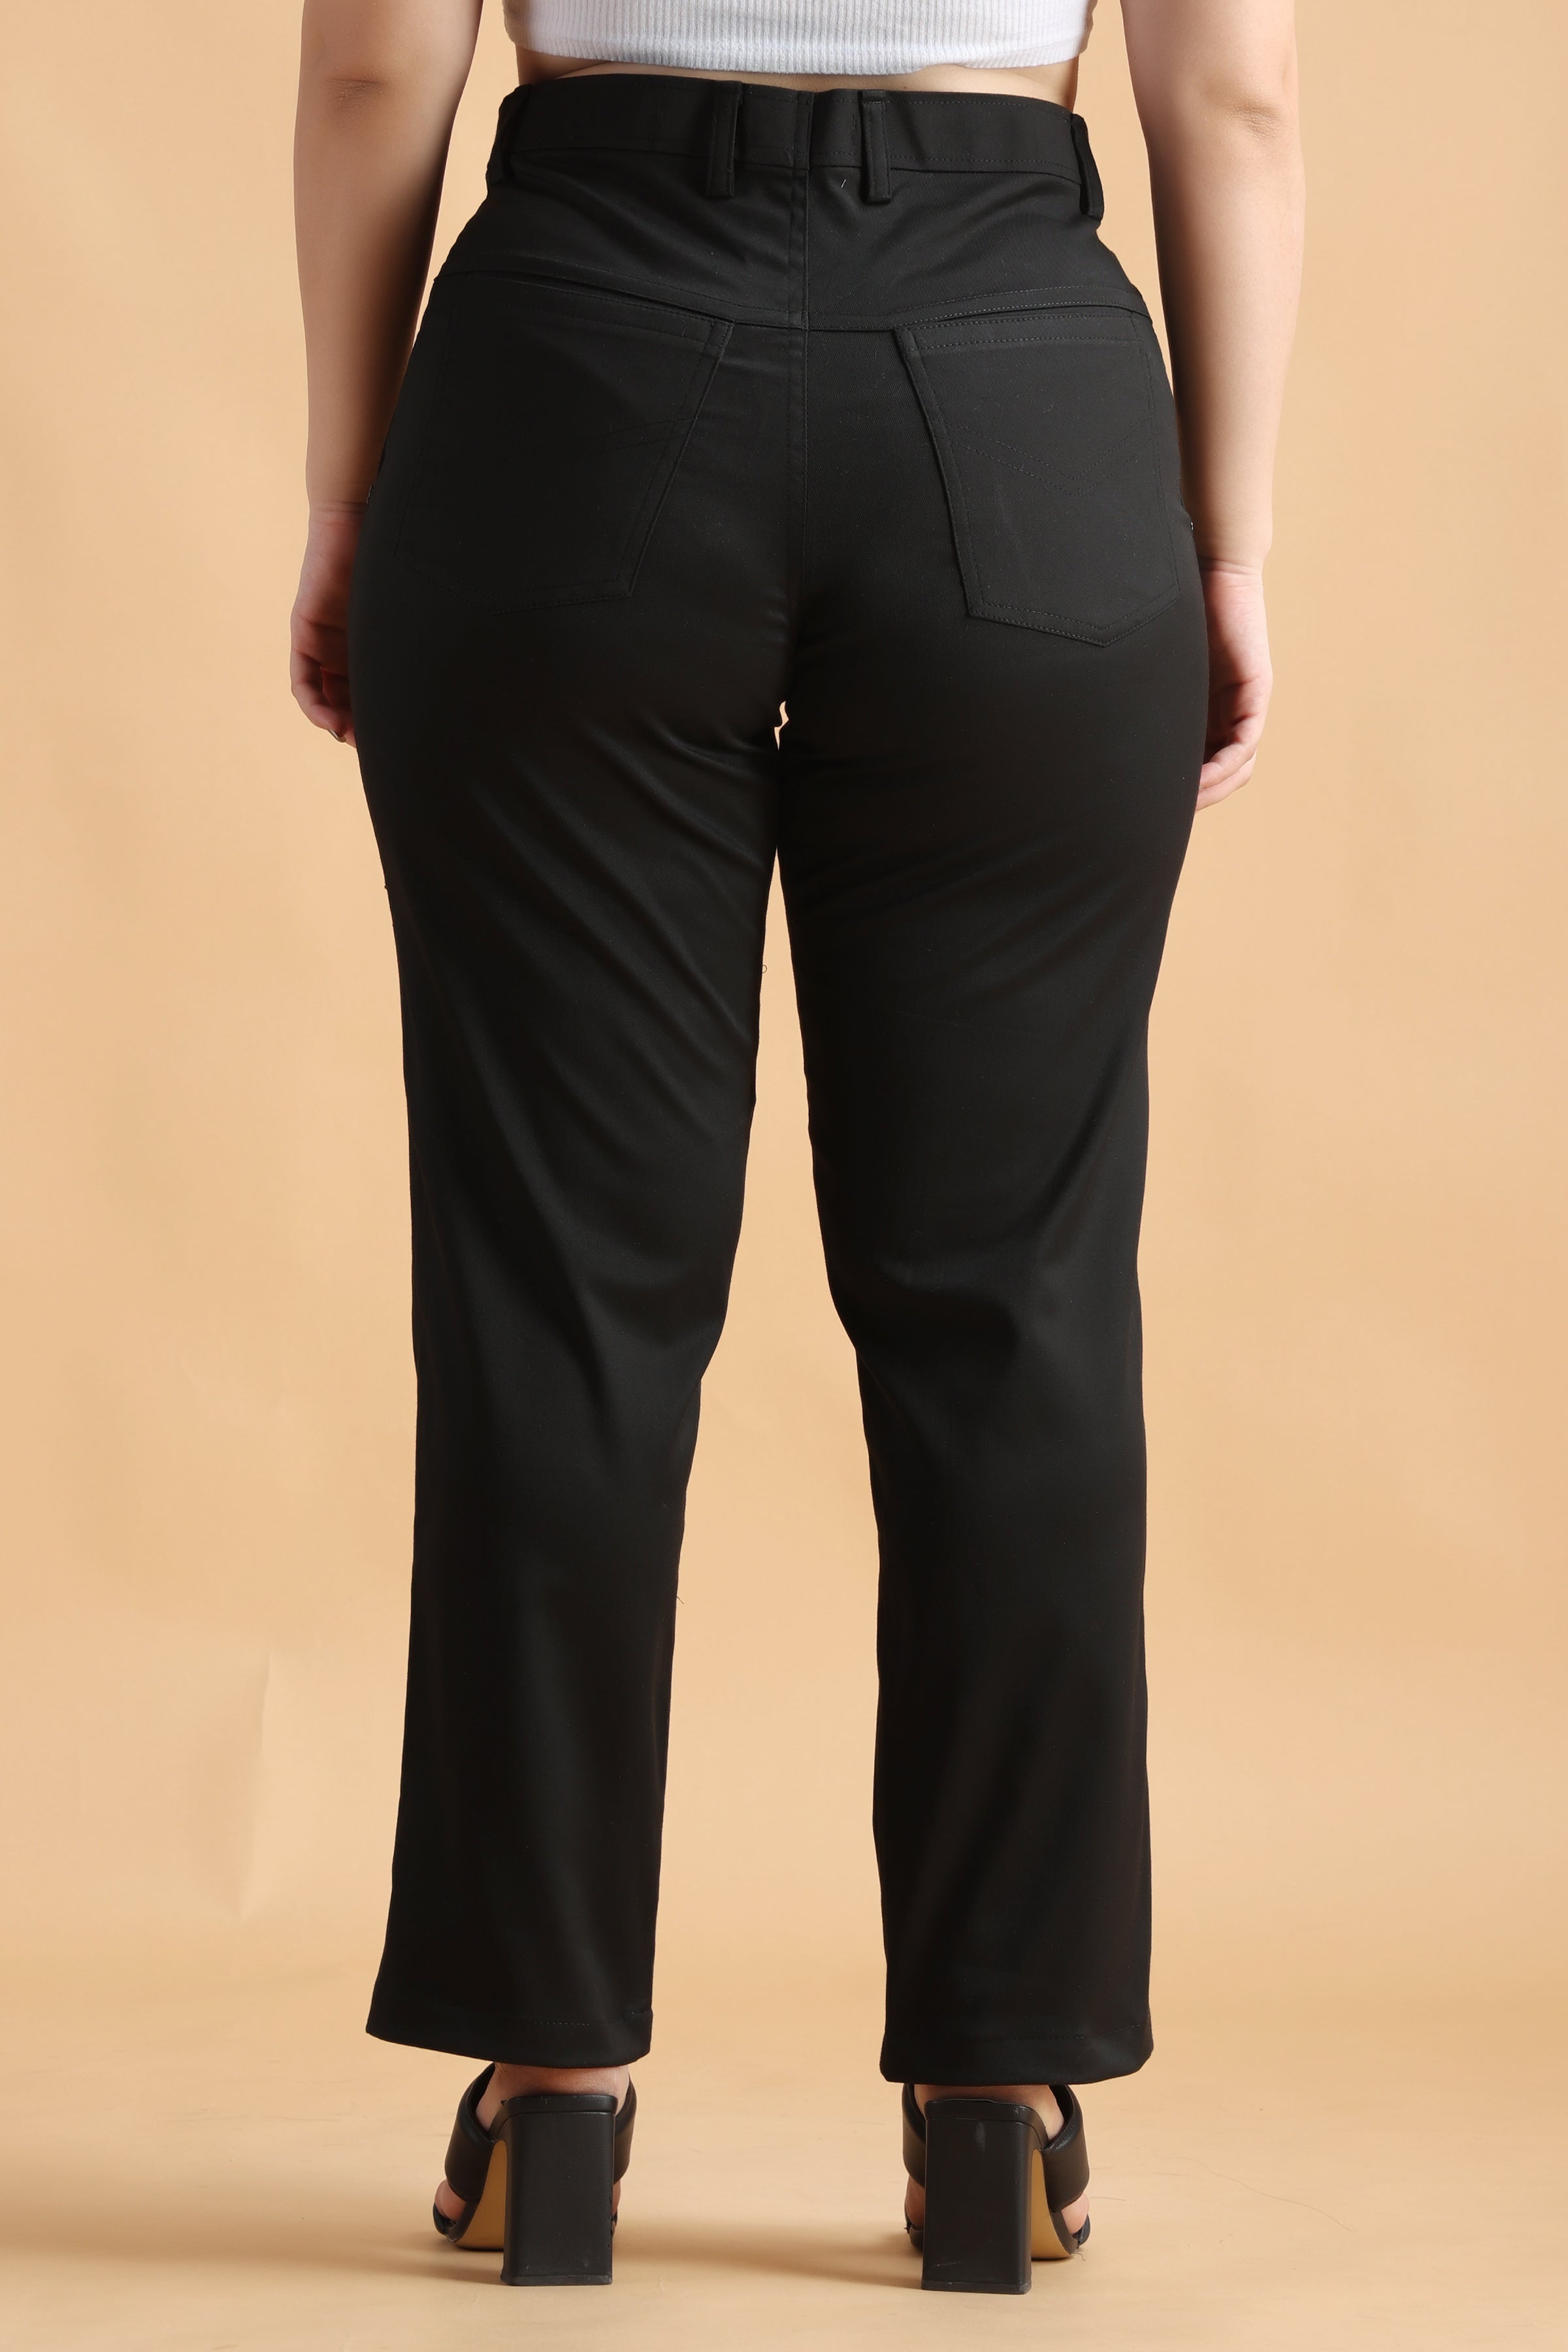 Buy Yaha Style Slim Fit Black Formal Trouser for Gents  Polyester Viscose Formal  Pants for Men  Office Formal Pants for Men  Bottoms for Boys  28 at  Amazonin